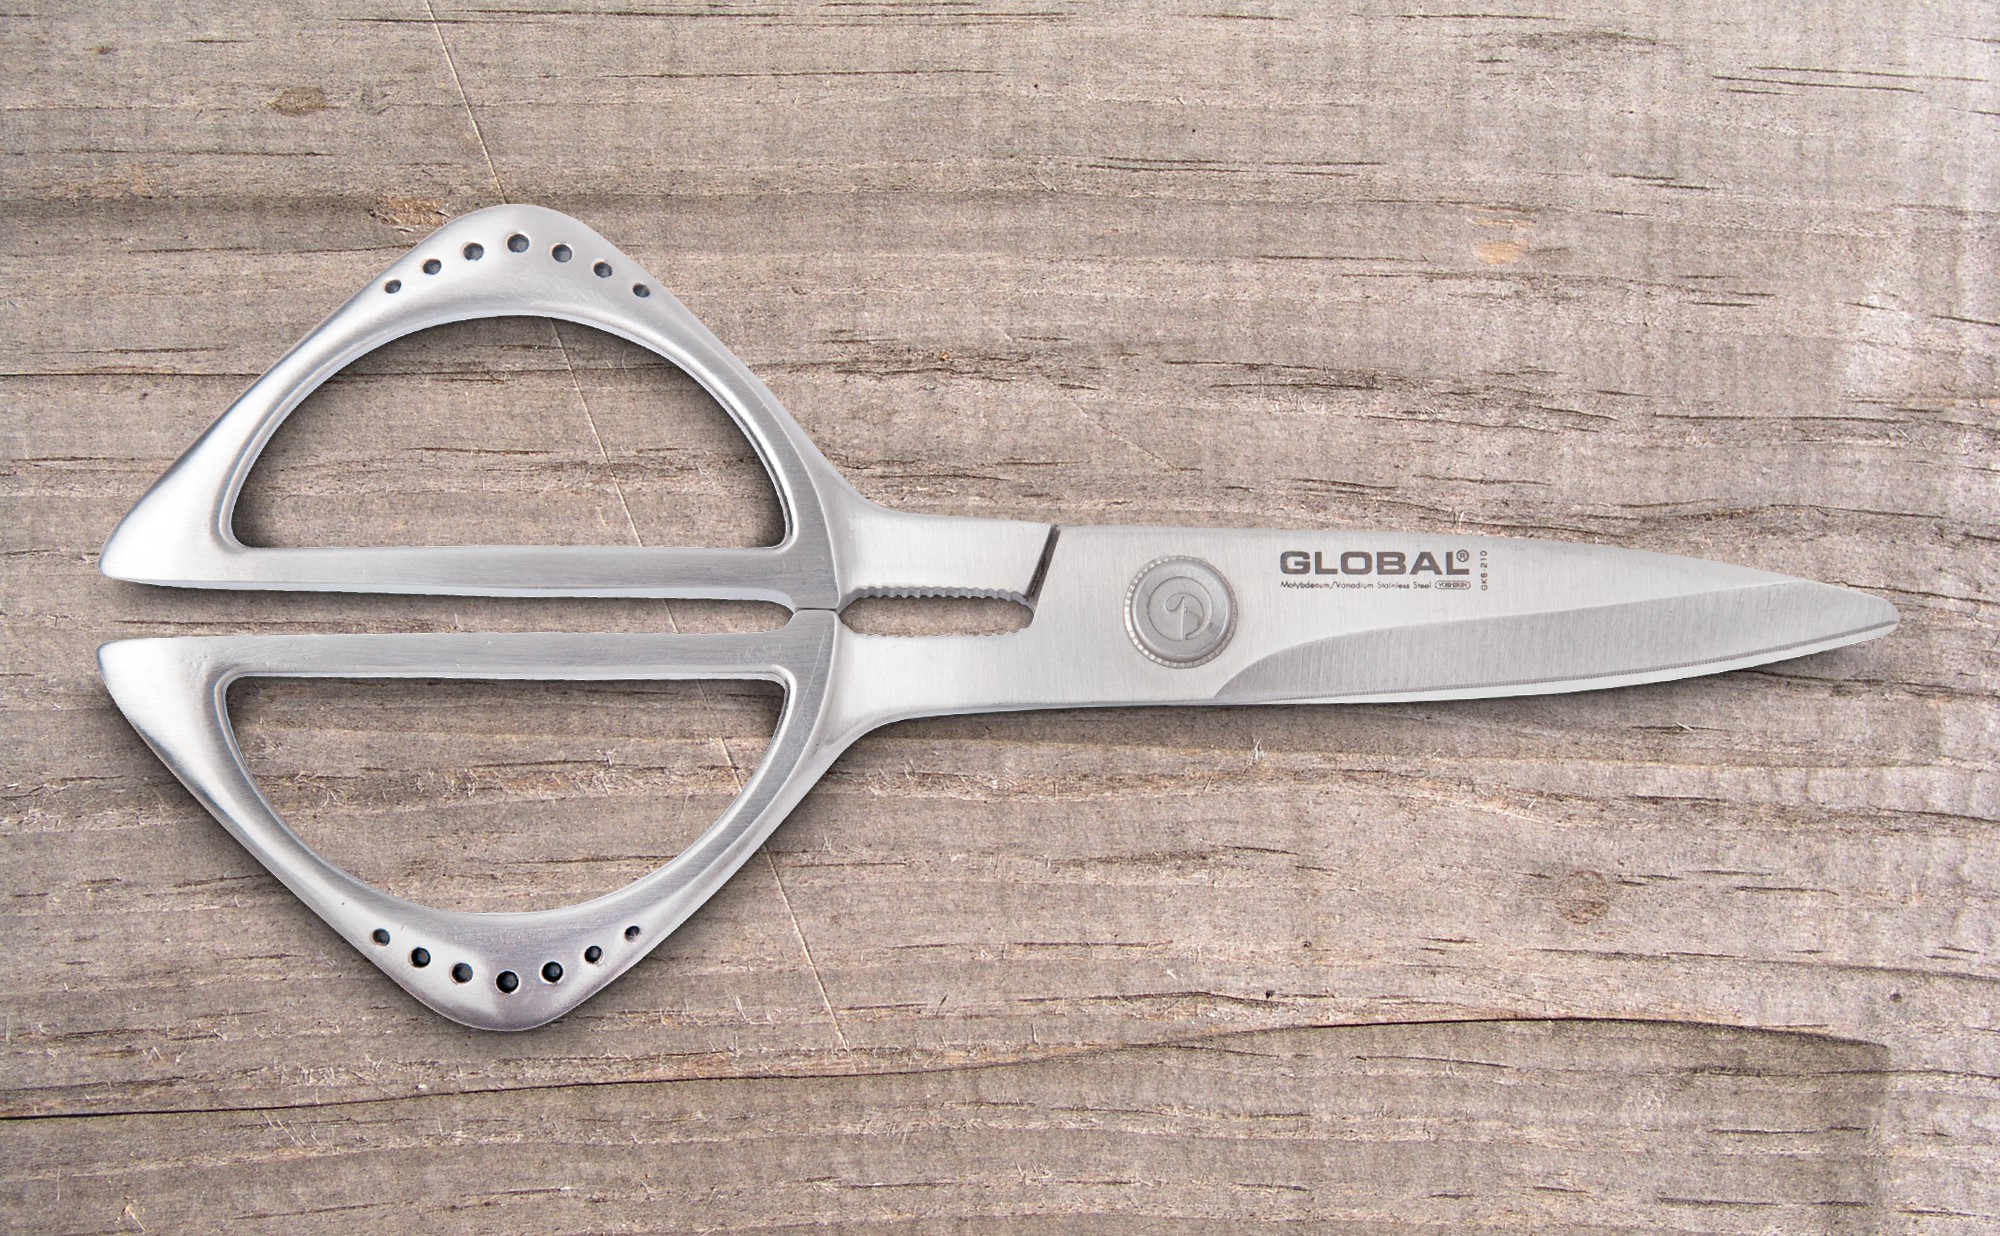 Global Scissors